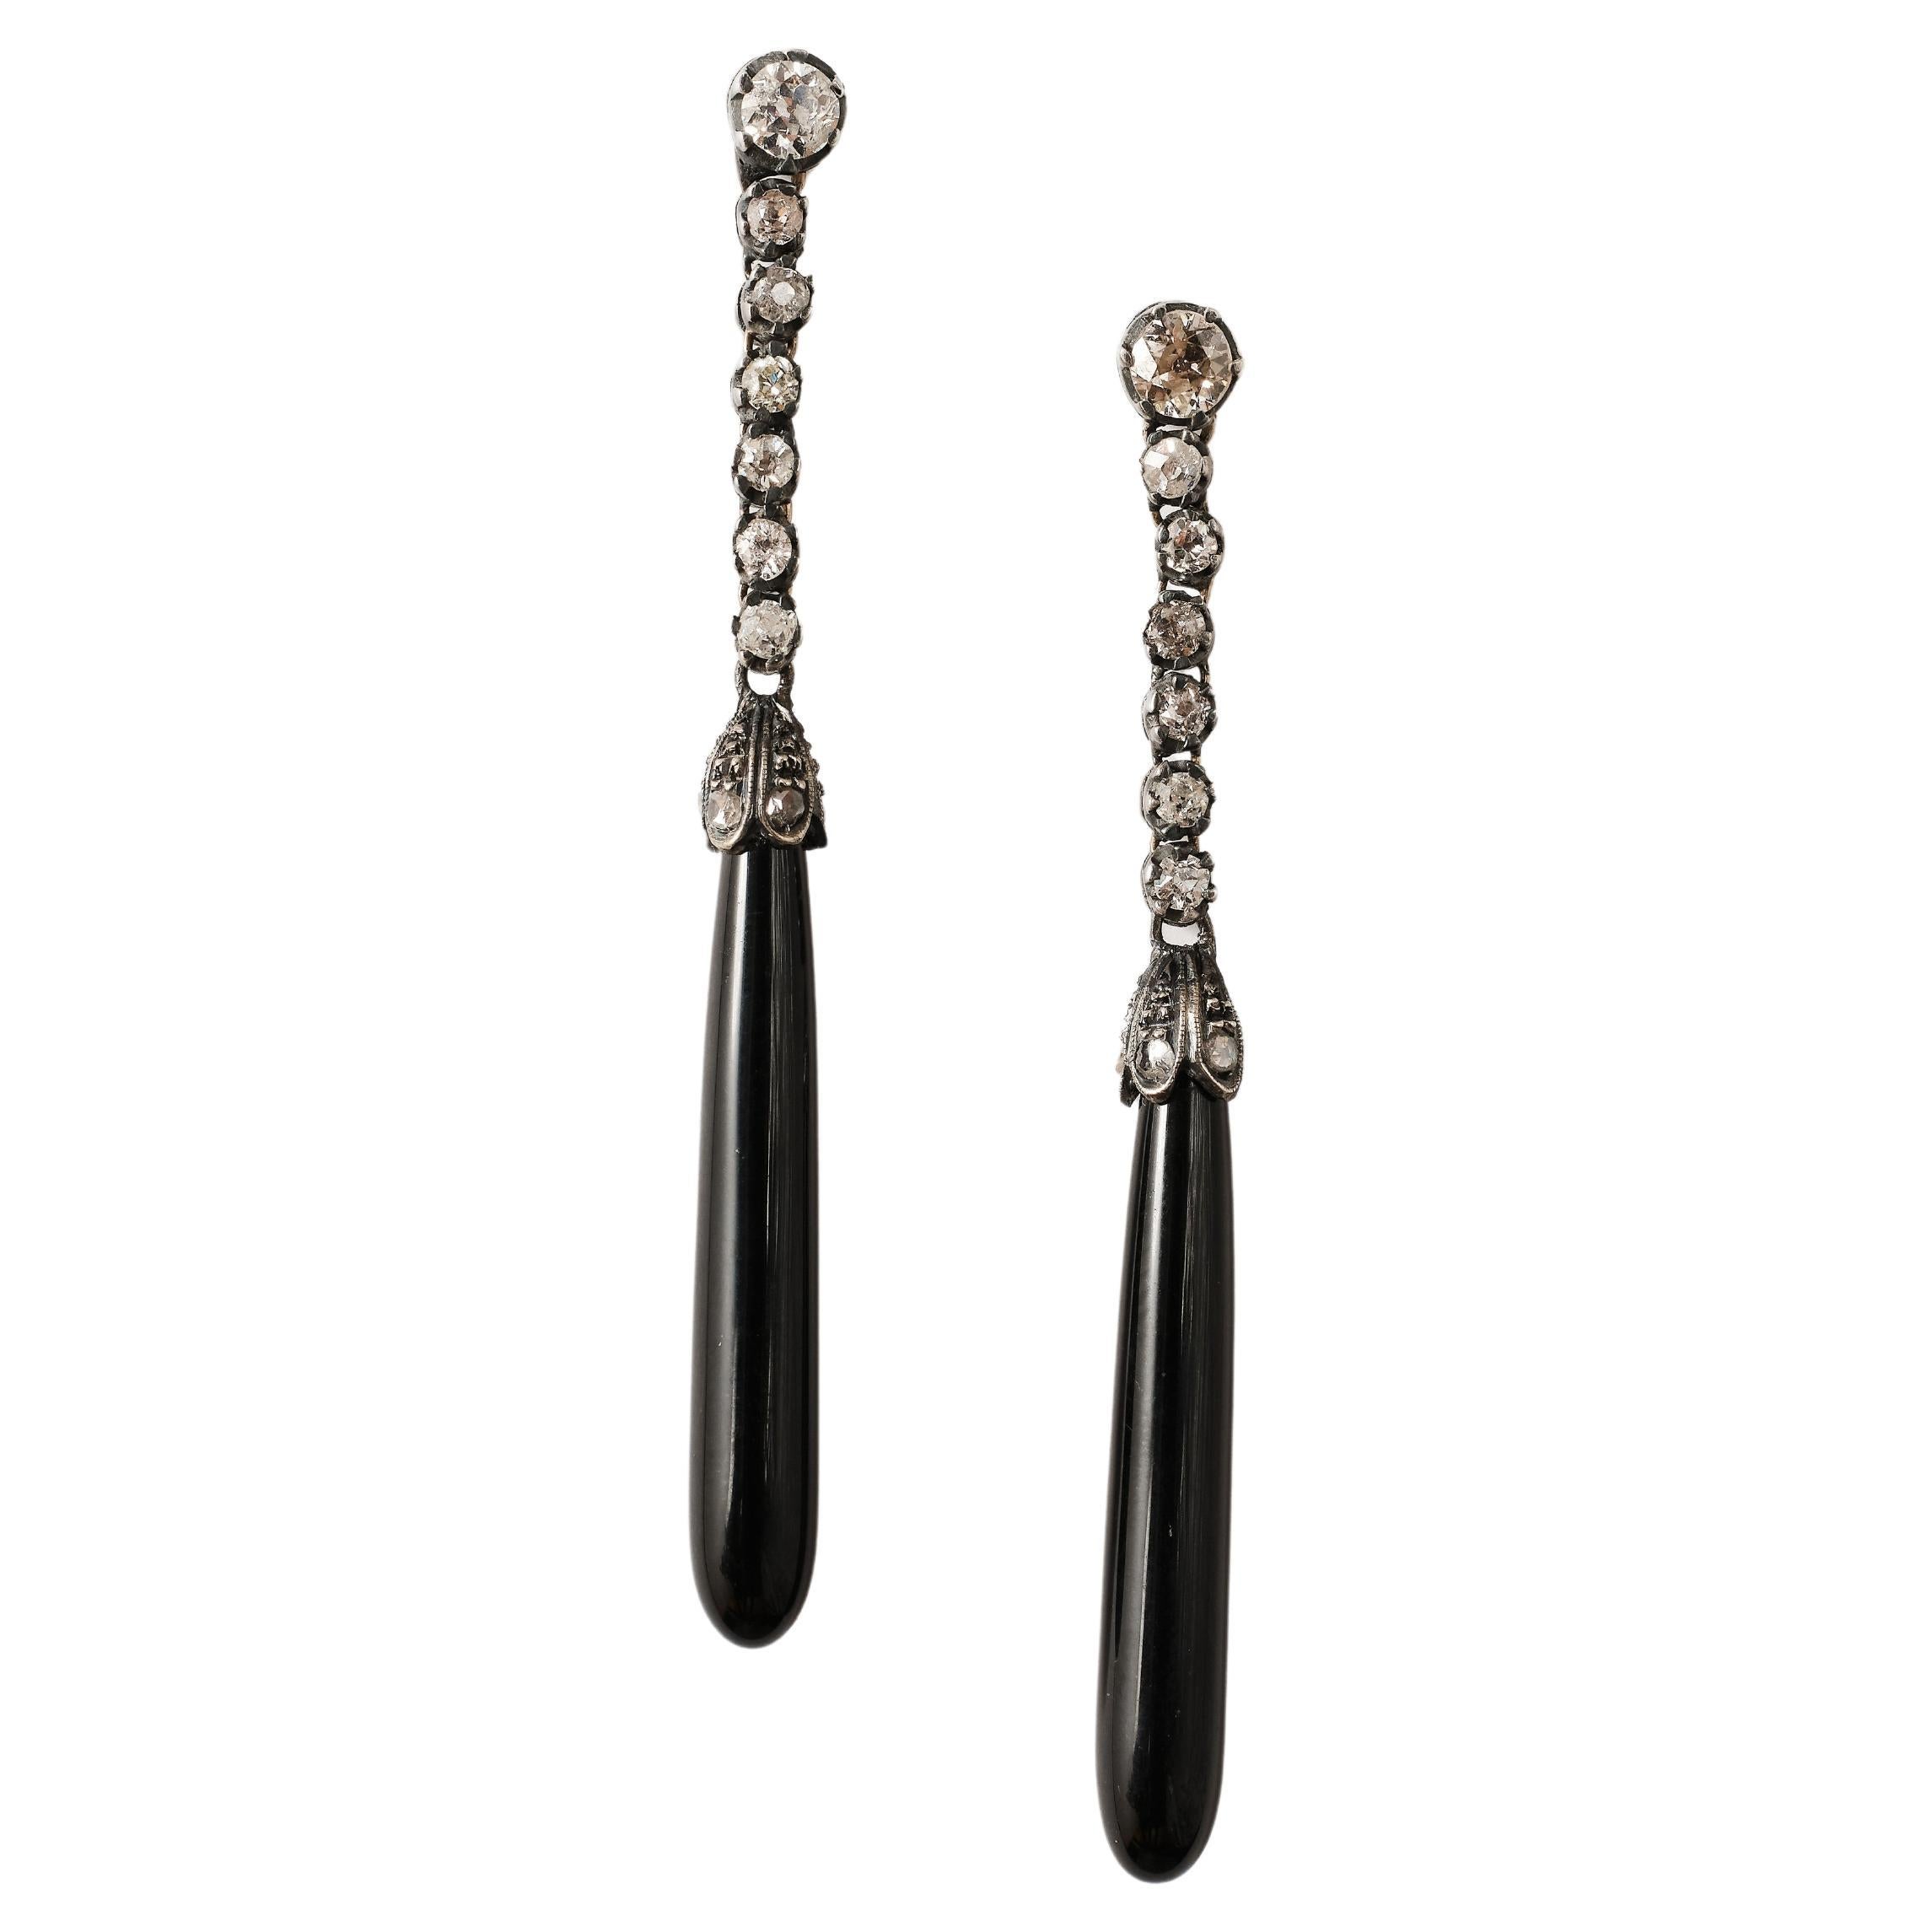 19th century onyx and diamond pendant earrings